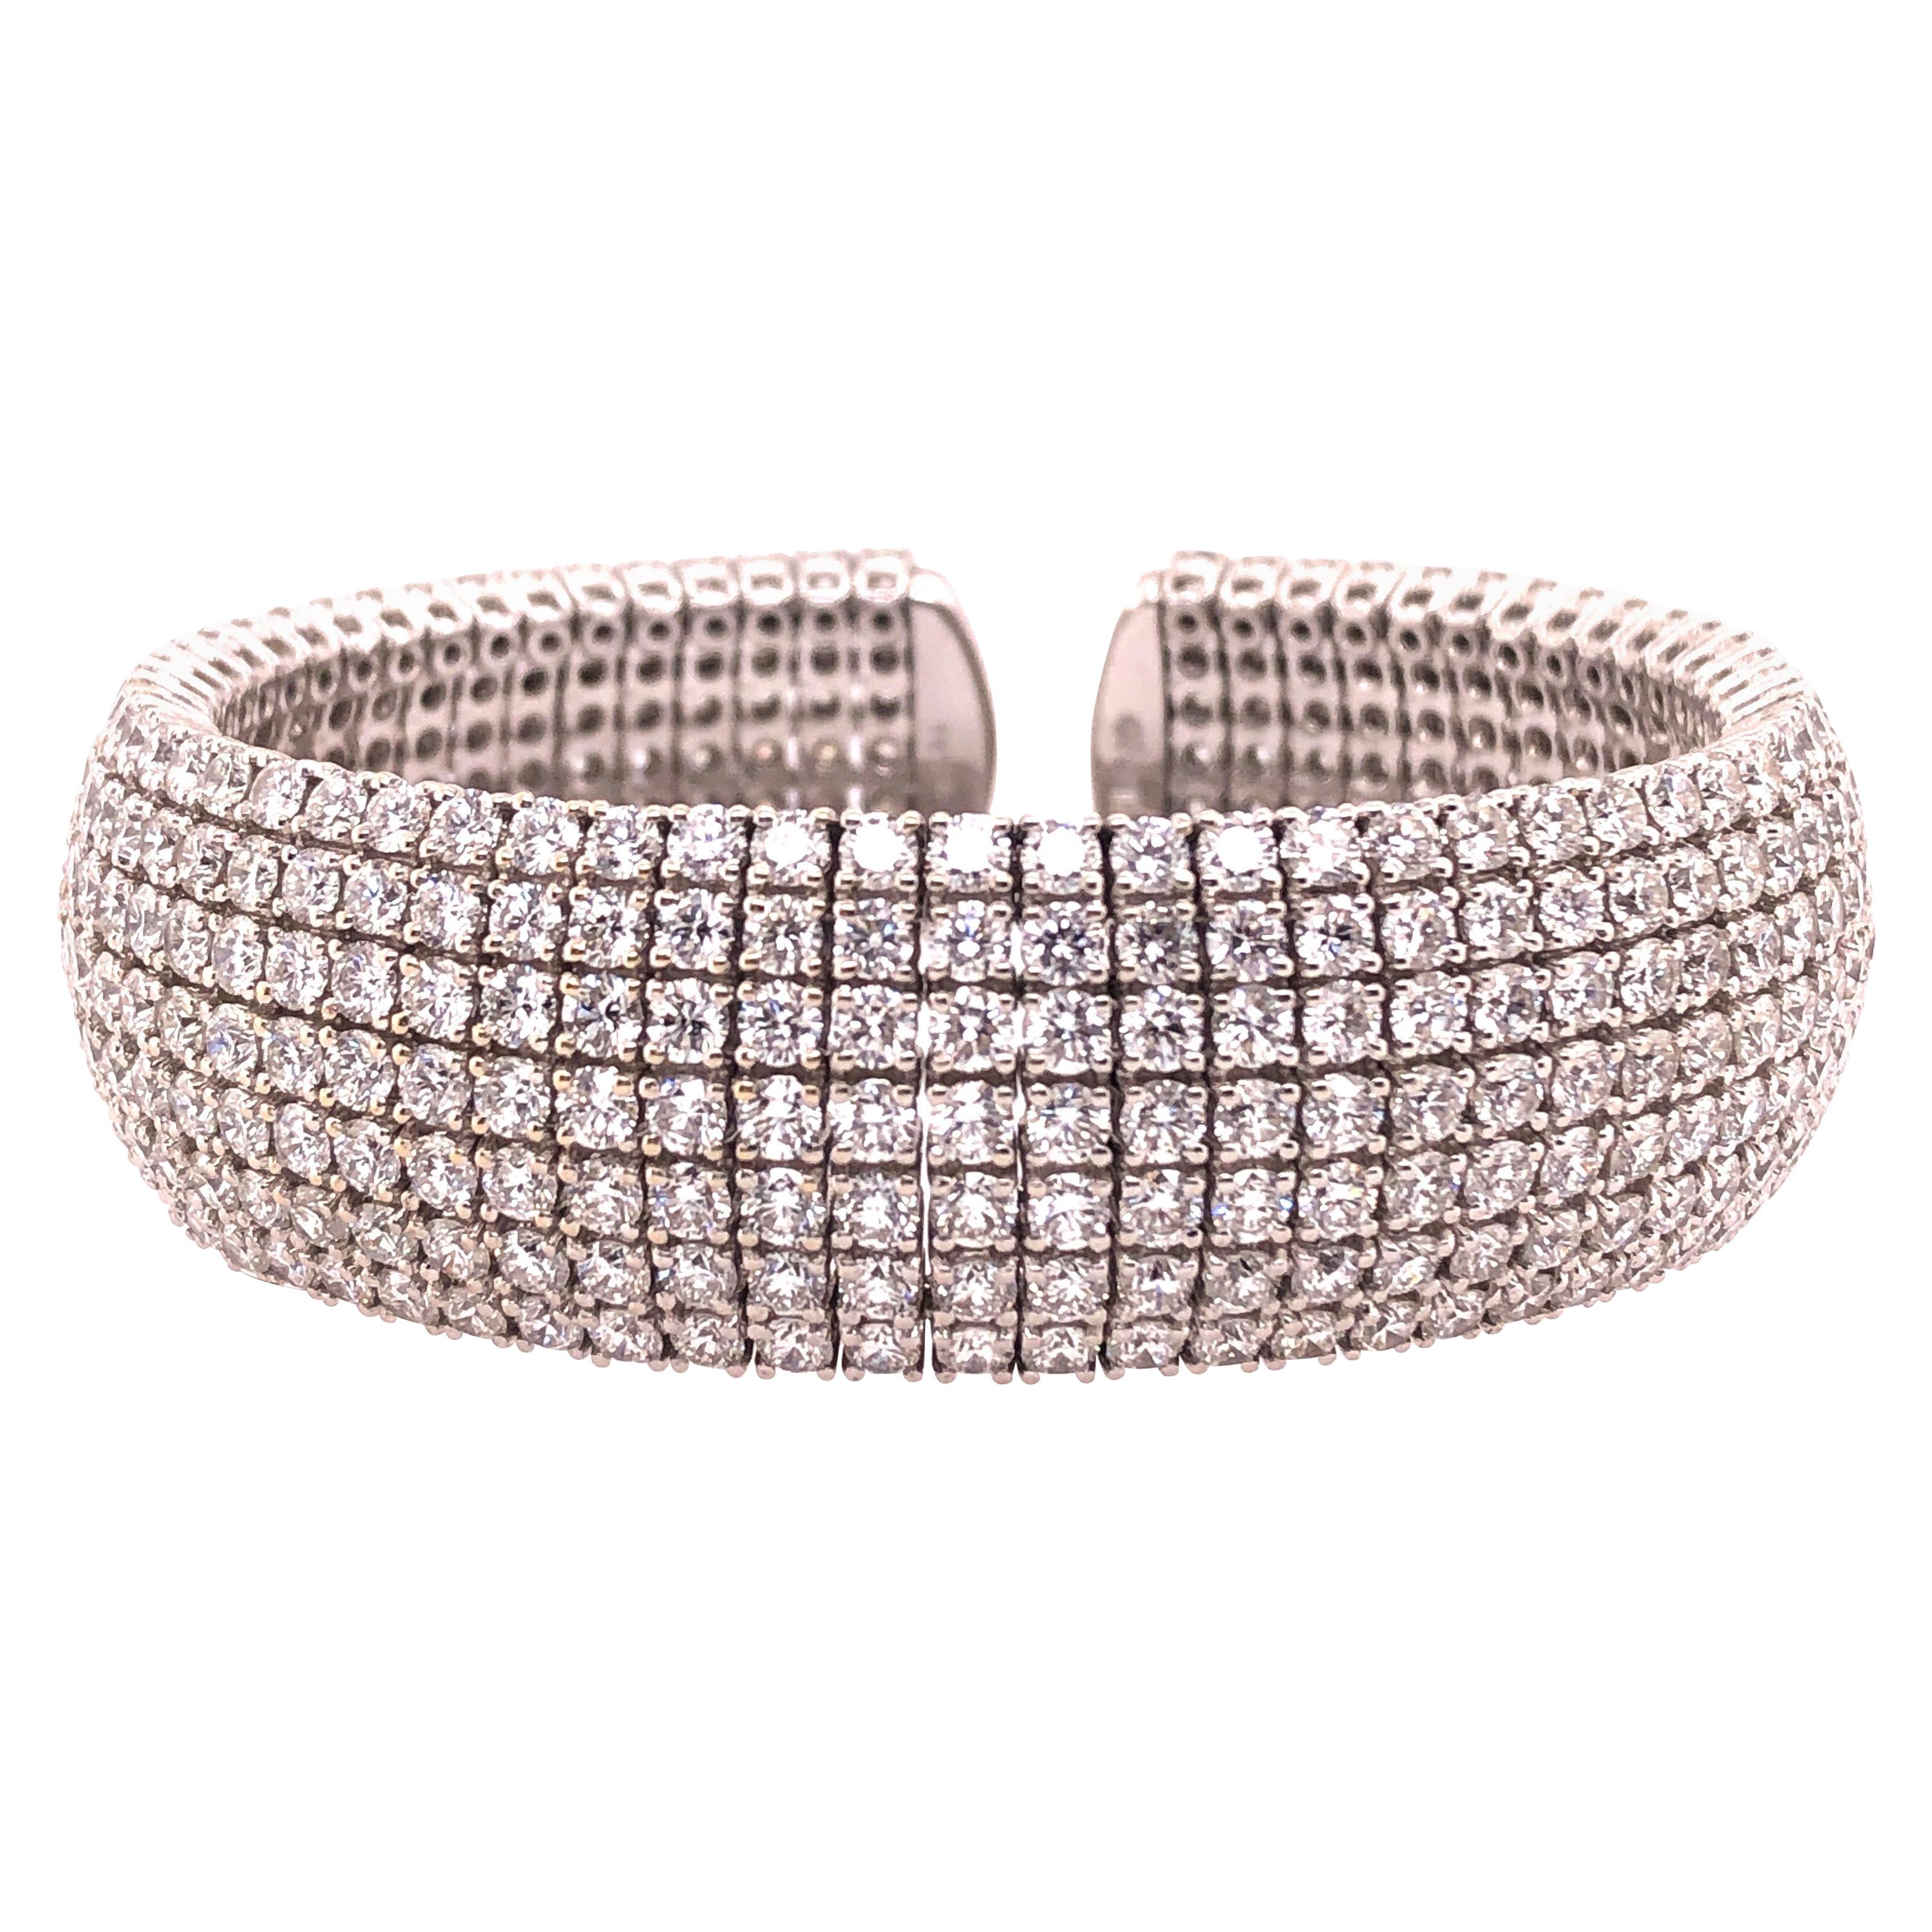 18 Karat White Gold and Diamond Cuff Bracelet Weighing Approx 32.89 Carat